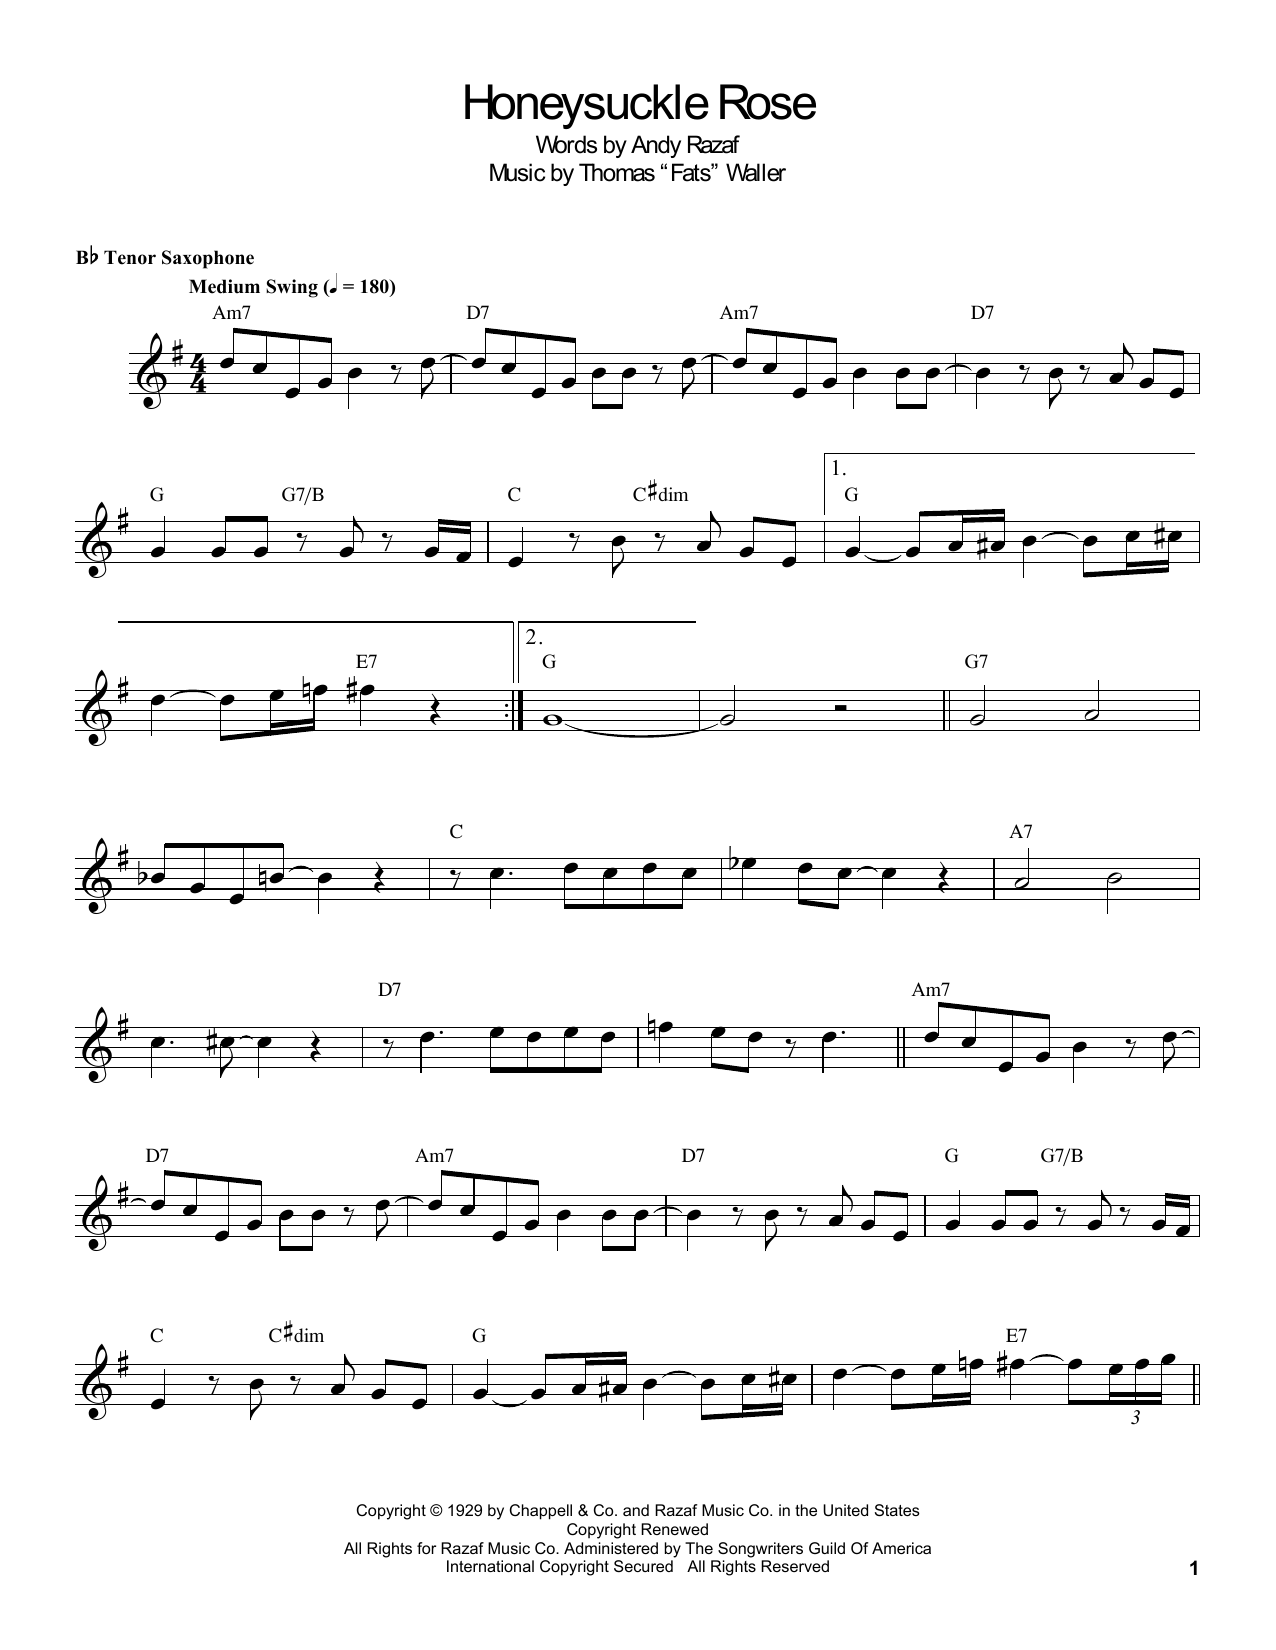 Coleman Hawkins Honeysuckle Rose Sheet Music Notes & Chords for Tenor Sax Transcription - Download or Print PDF